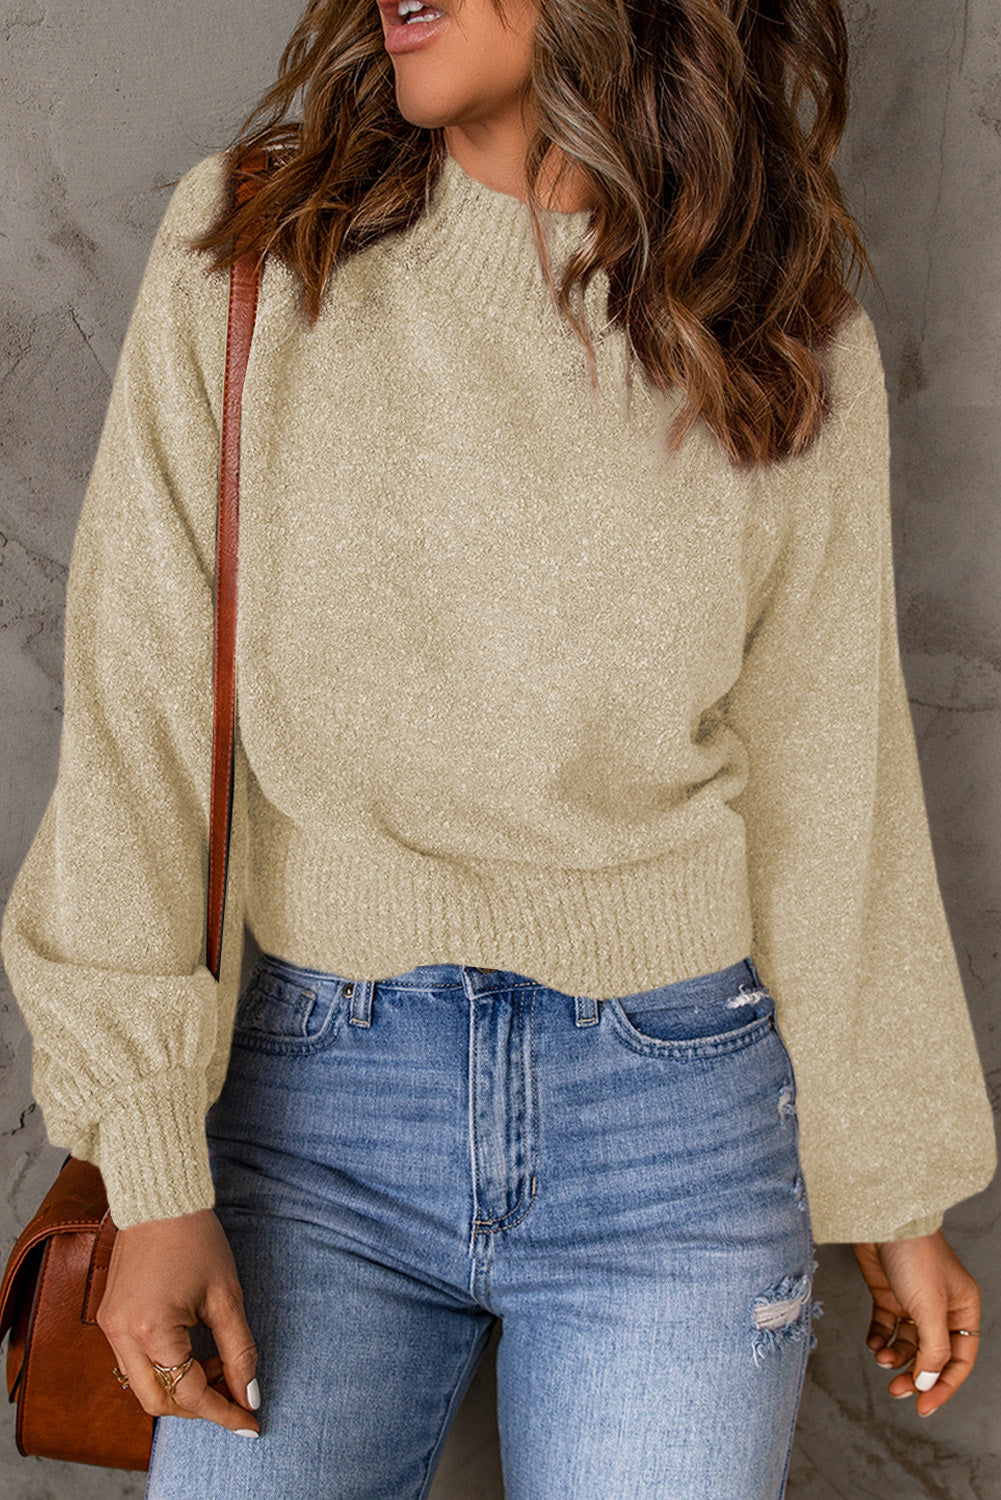 Heather Brown Sweater - Turtleneck Sweater - Chunky Knit Sweater - Lulus